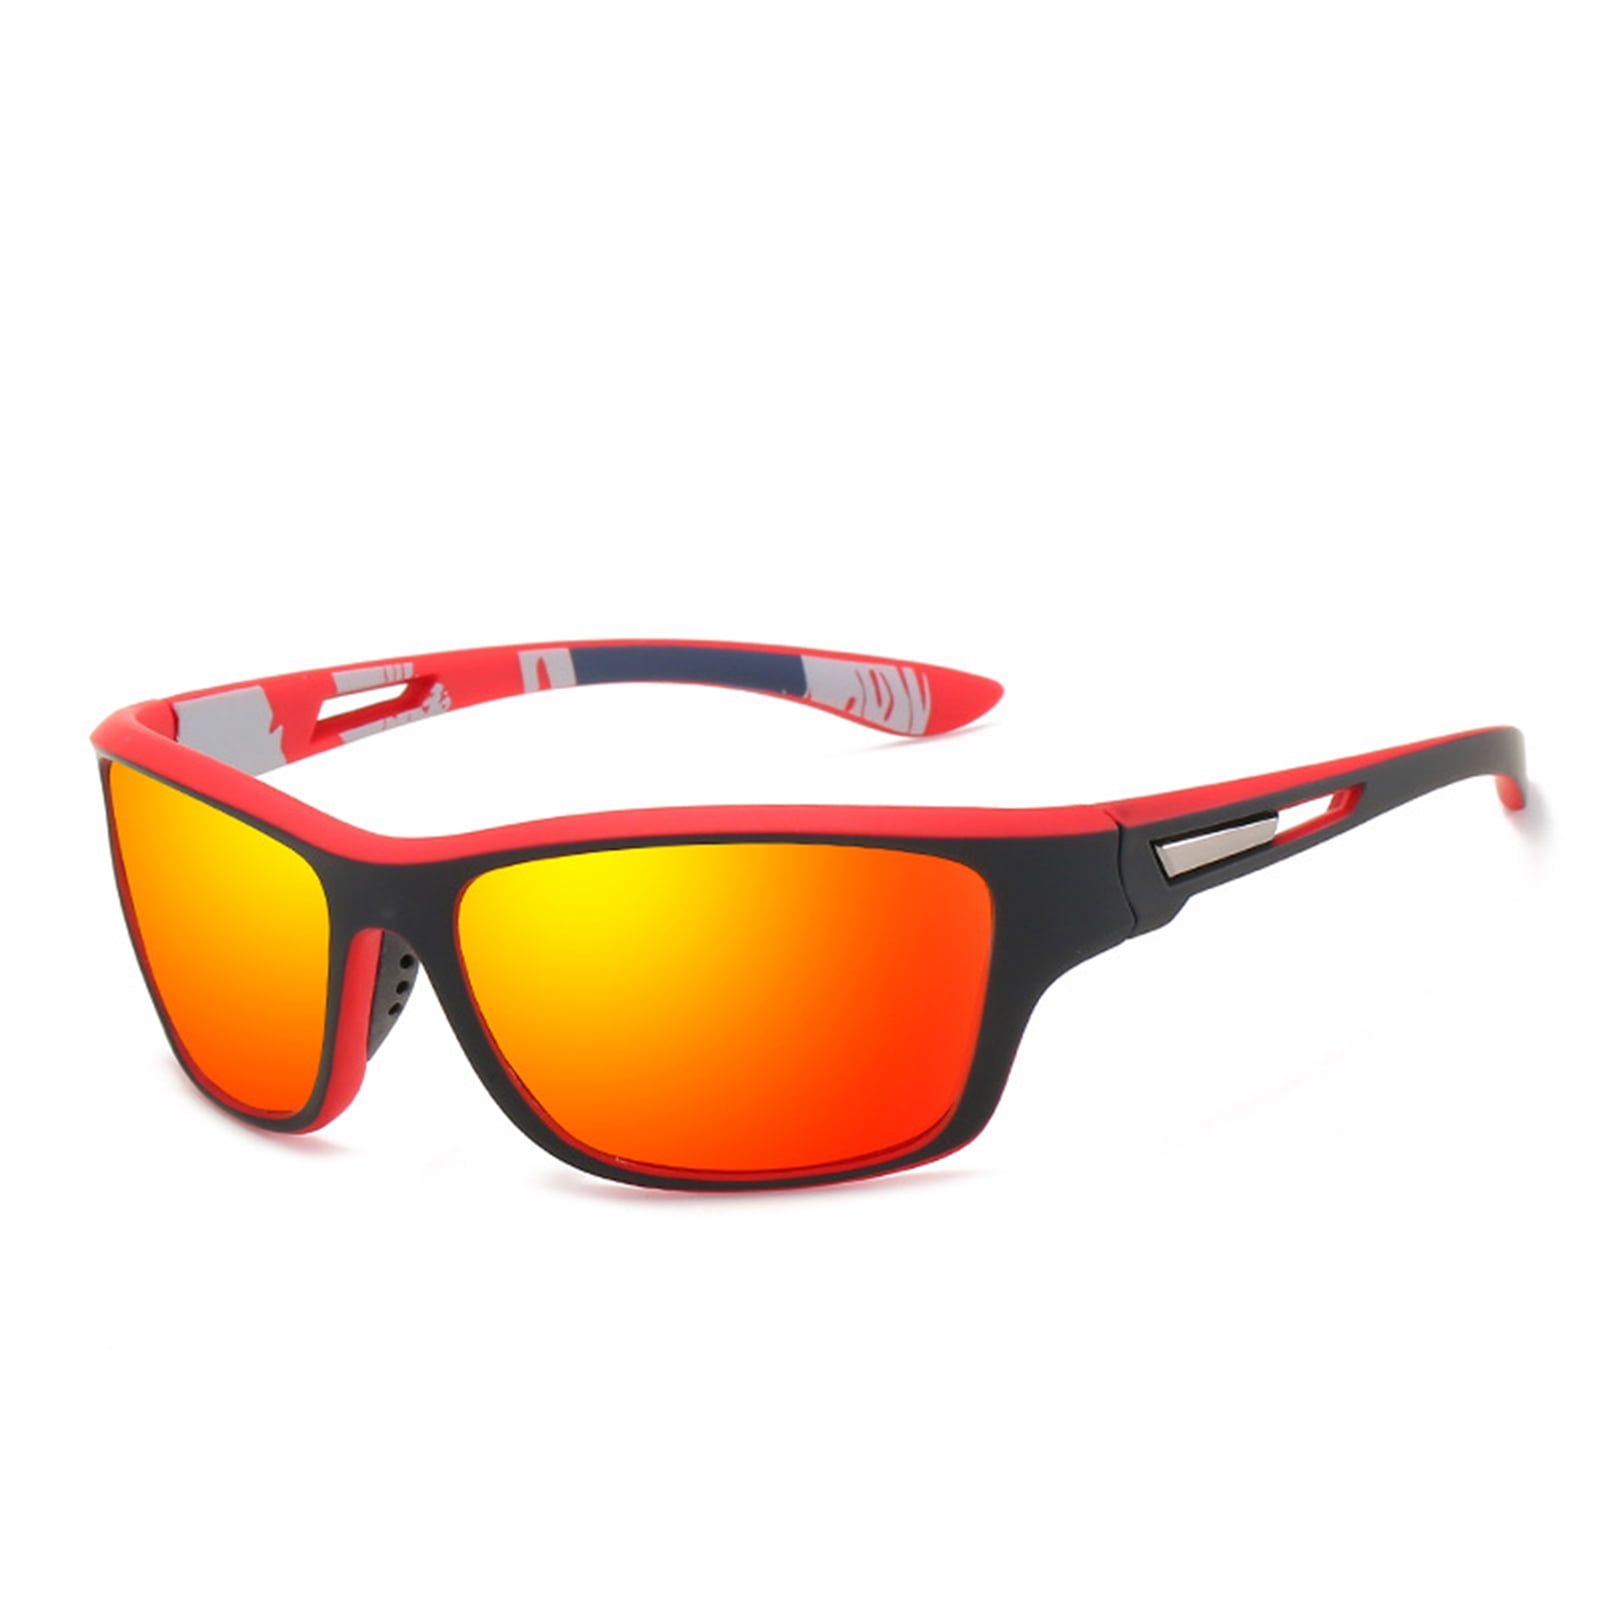 Mens Polarized Sunglasses Nitrogen Translucent Colors Low Profile Sport Casual 